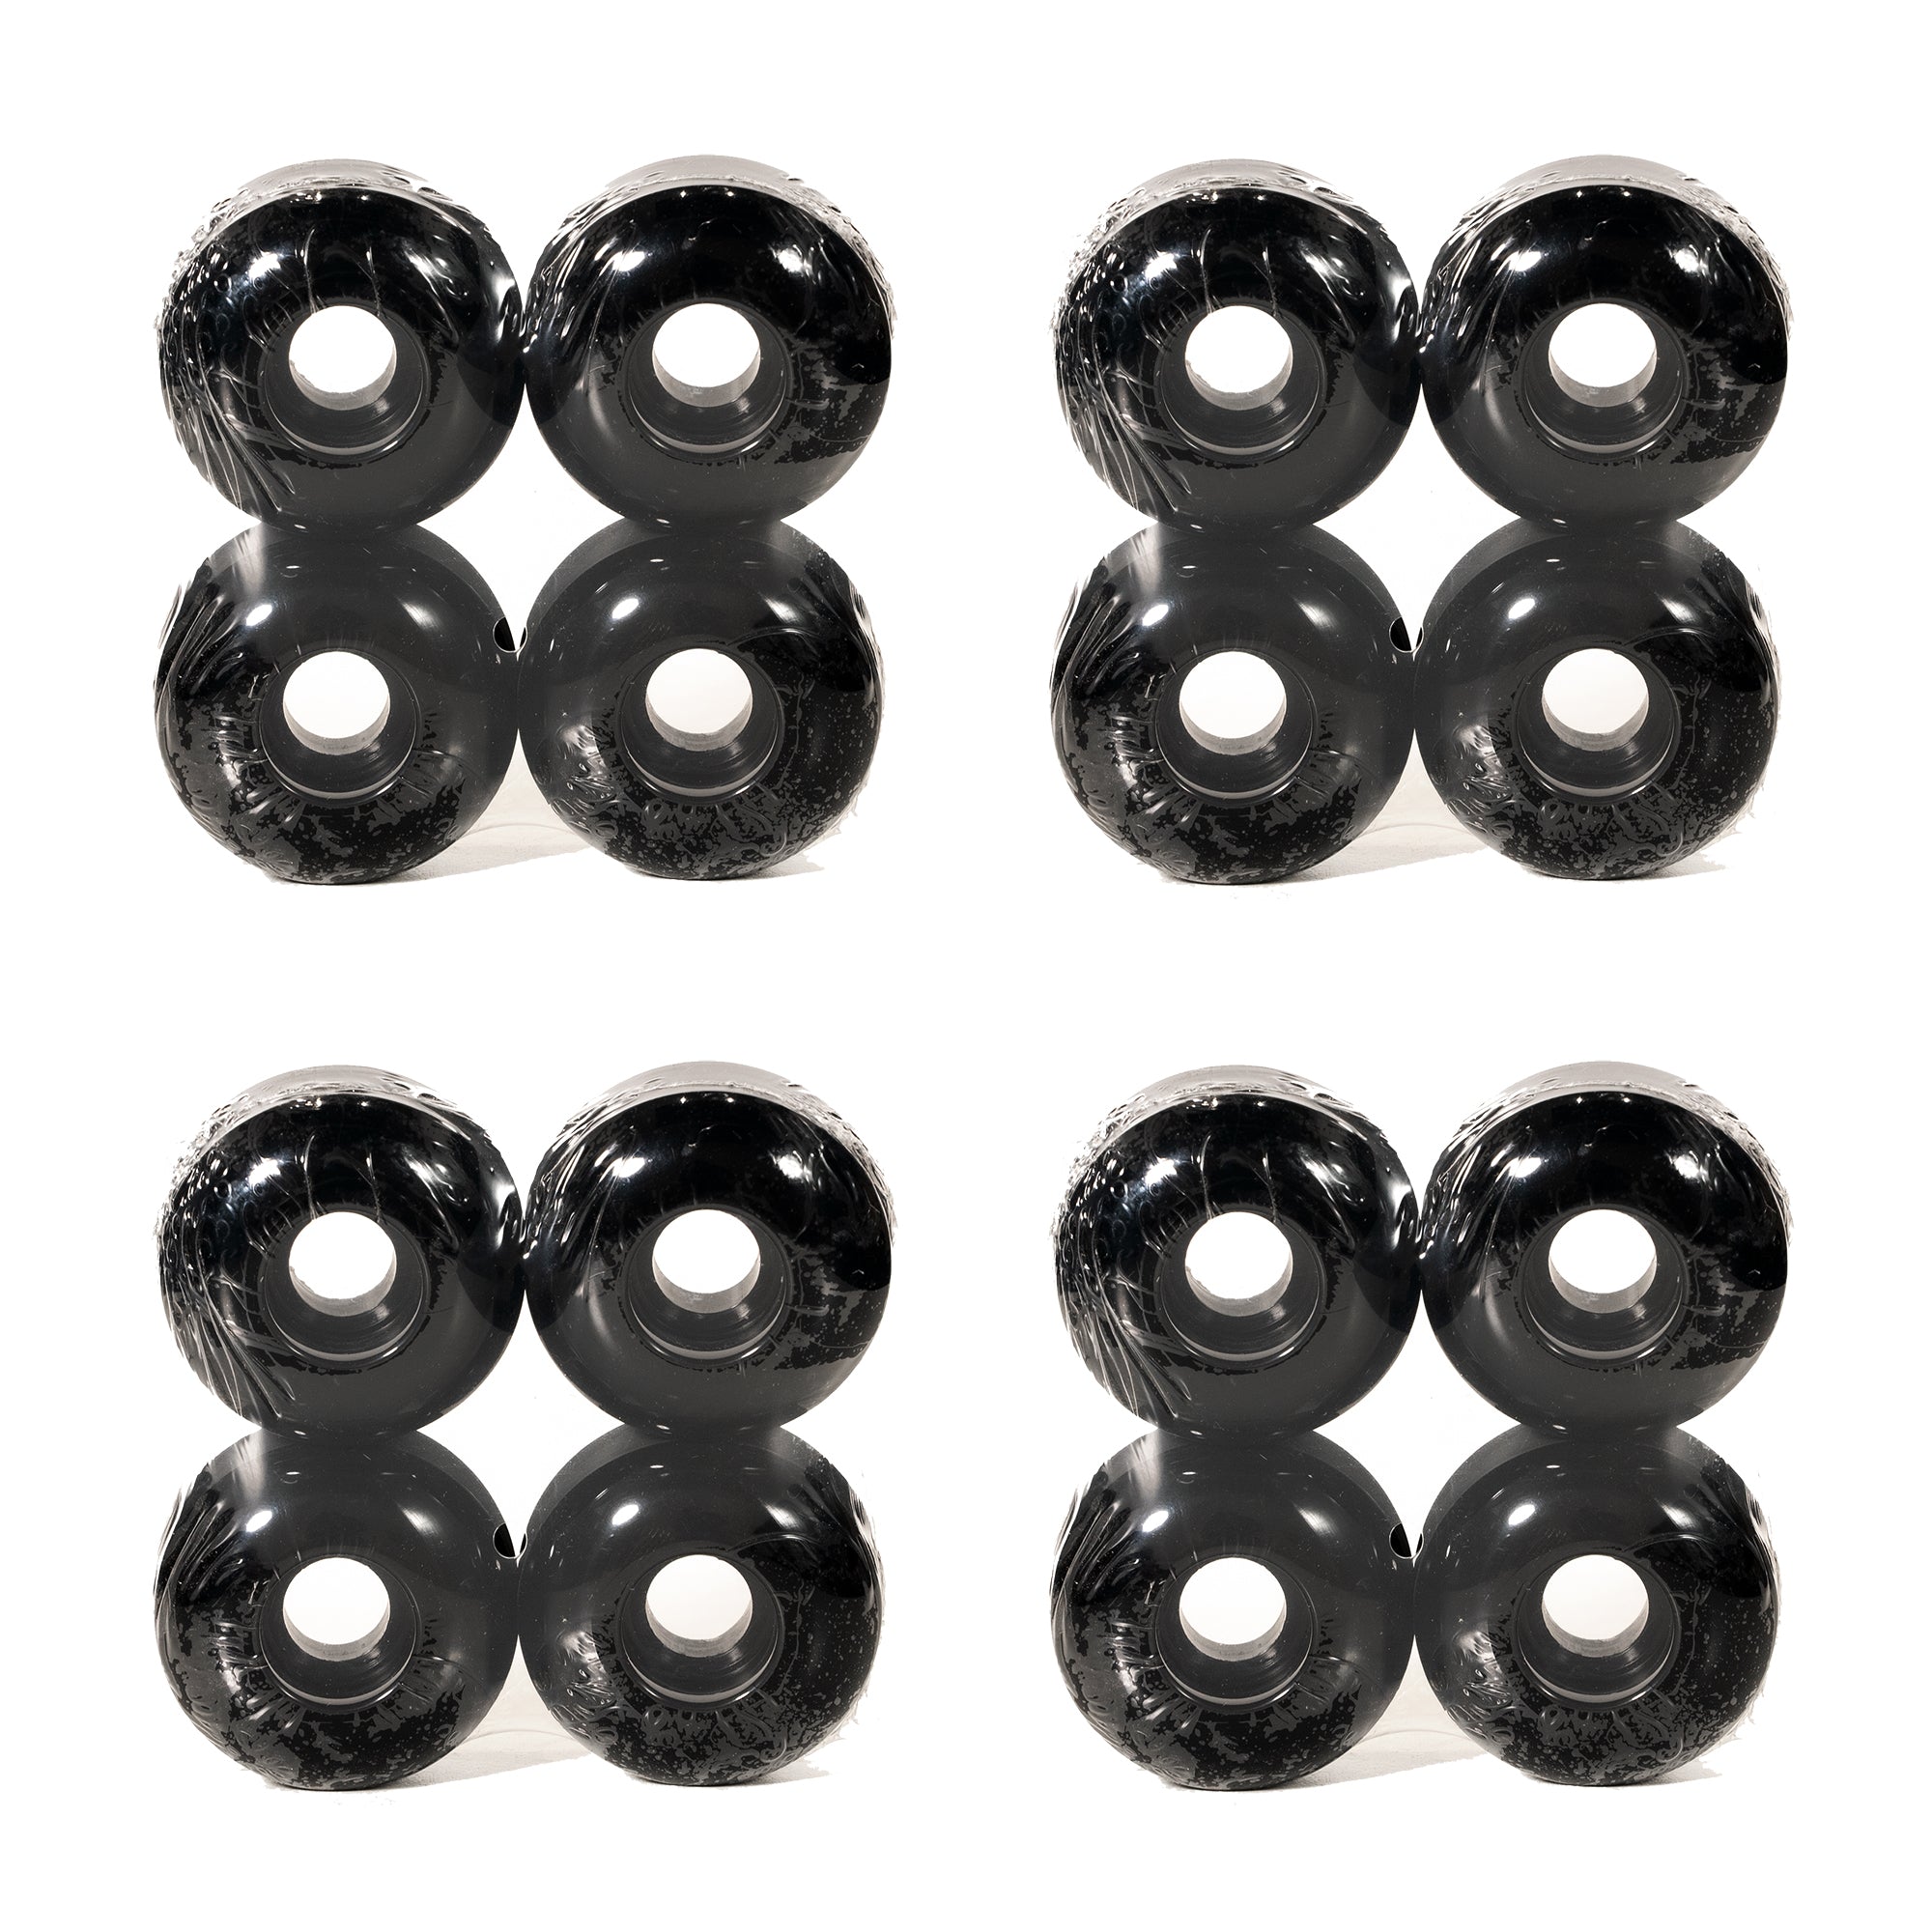 4 Sets of 4 New Blank Black 52mm X 32mm Skateboard WHEELS 95A (16pcs)